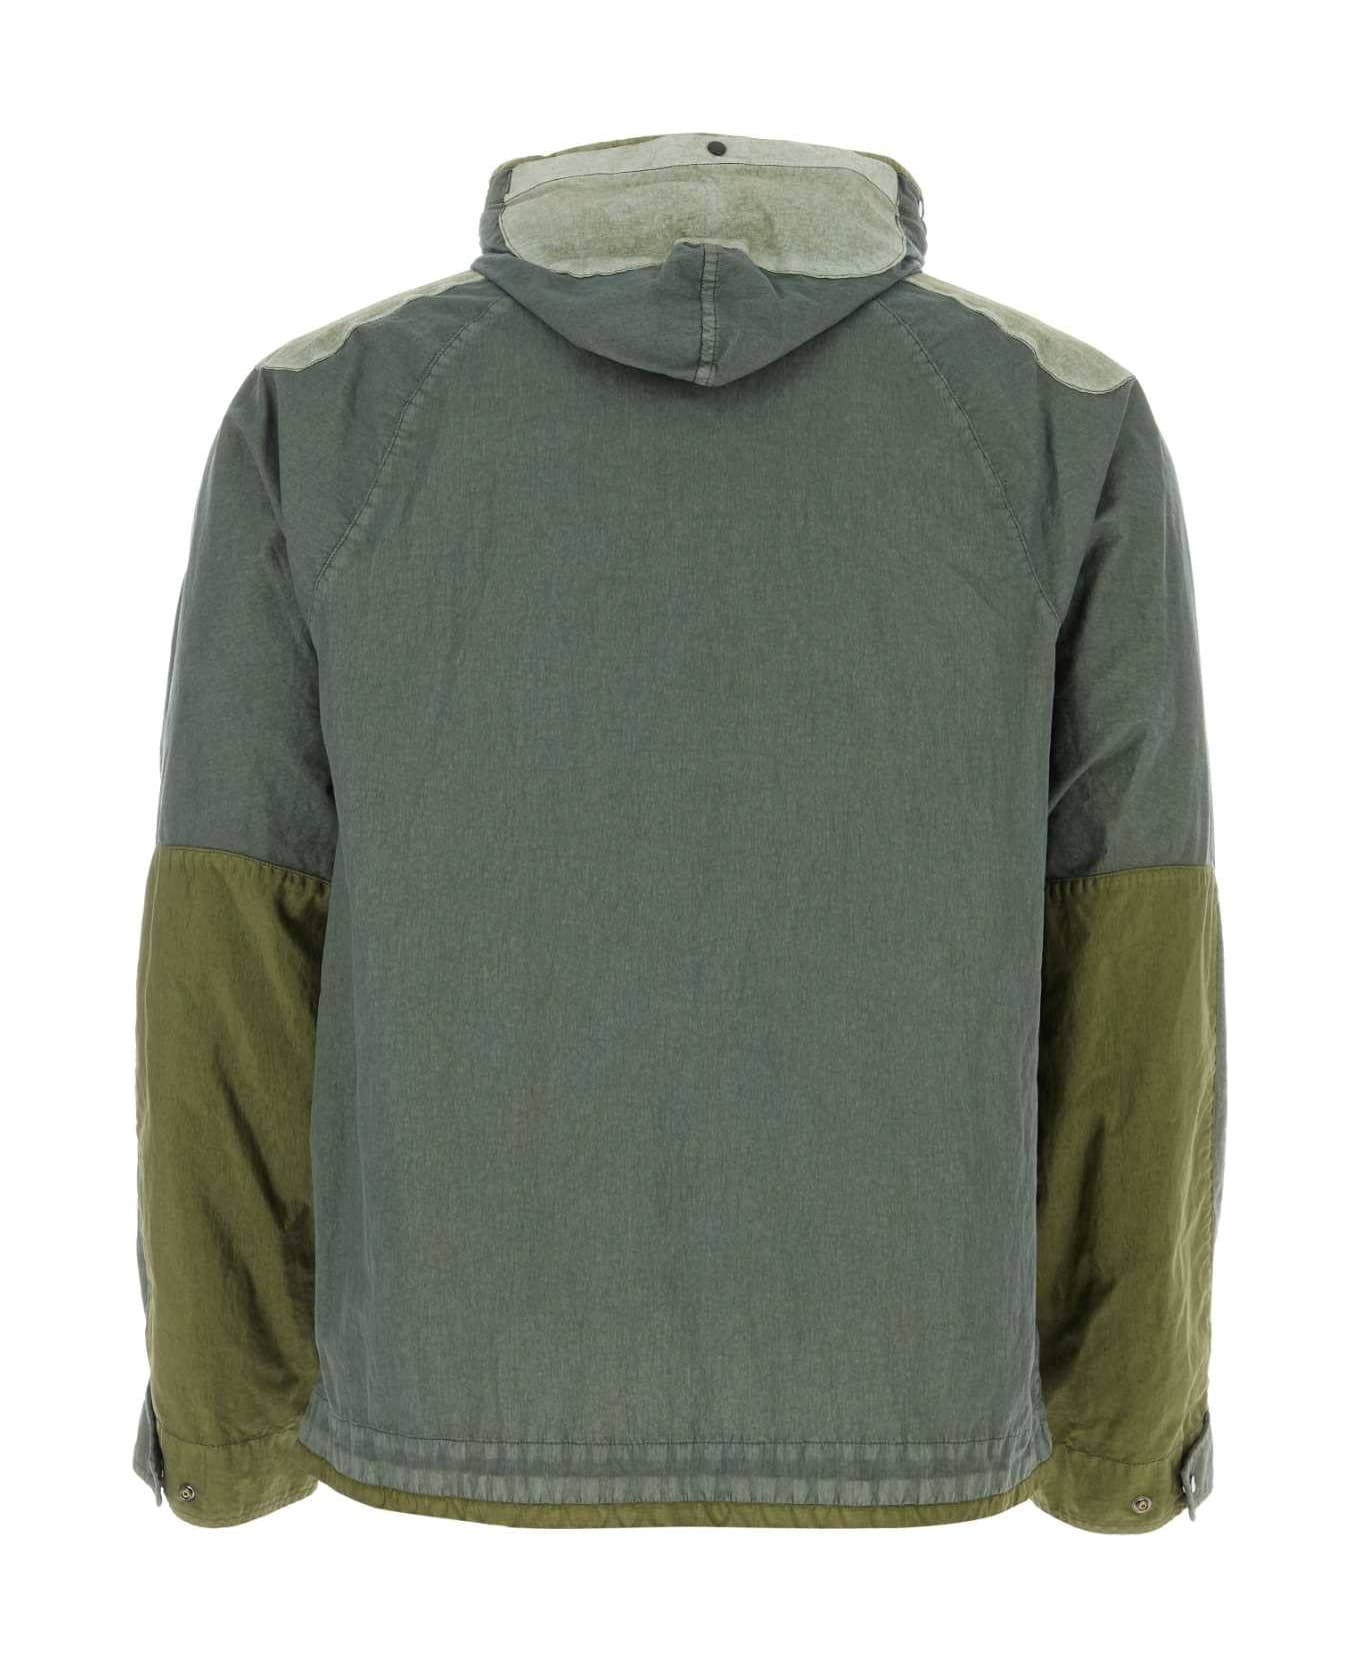 C.P. Company Green Cotton Blend Jacket - AGAVEGREEN